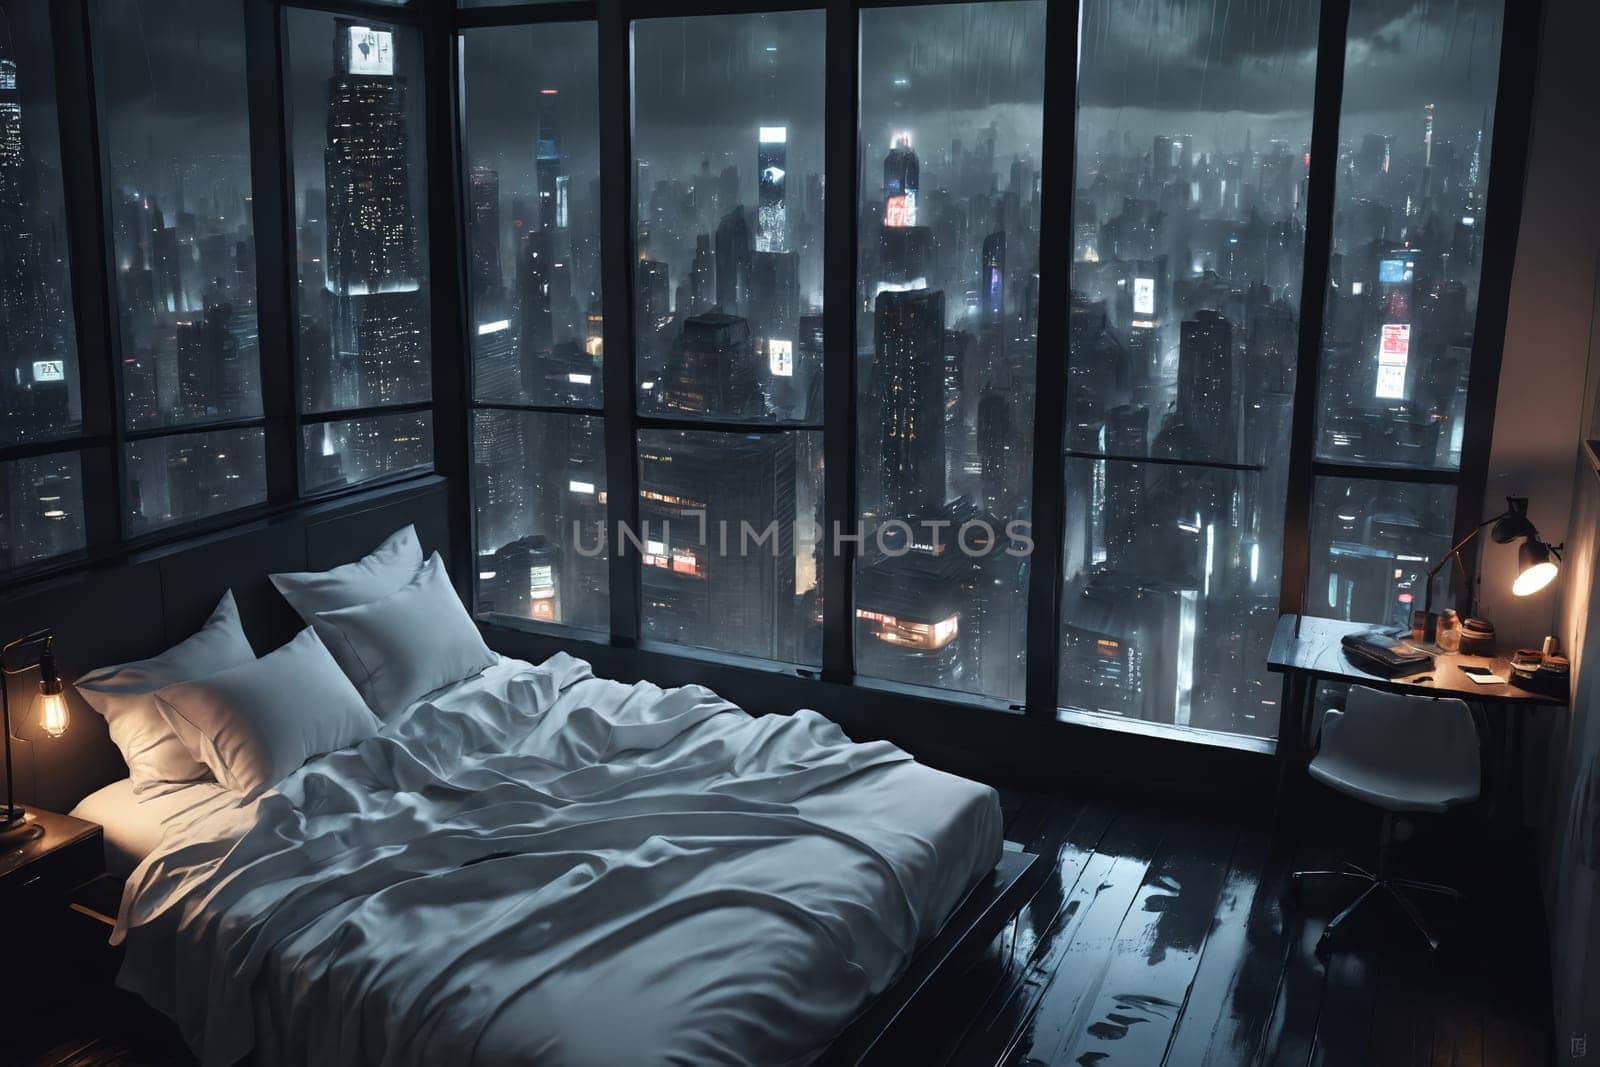 Rainy Night in the City: Serene Bedroom Overlooking an Illuminated Urban Scene by Andre1ns